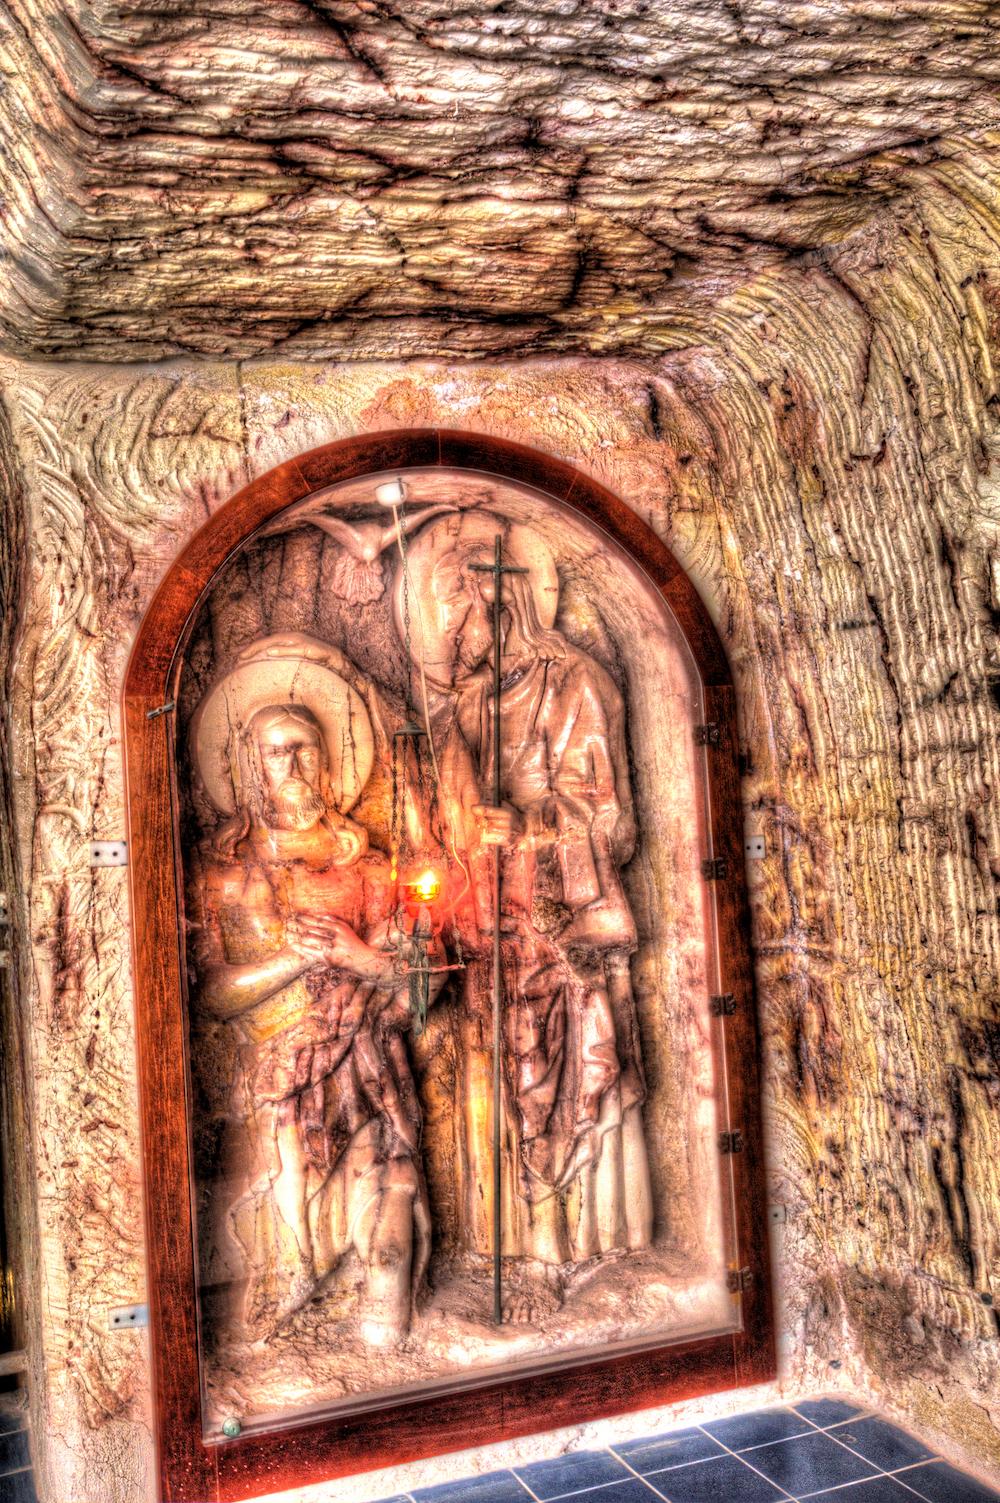 An ornate carving in Coober Pedy features religious-themed subject matter. (AdamDWilson/Shutterstock)